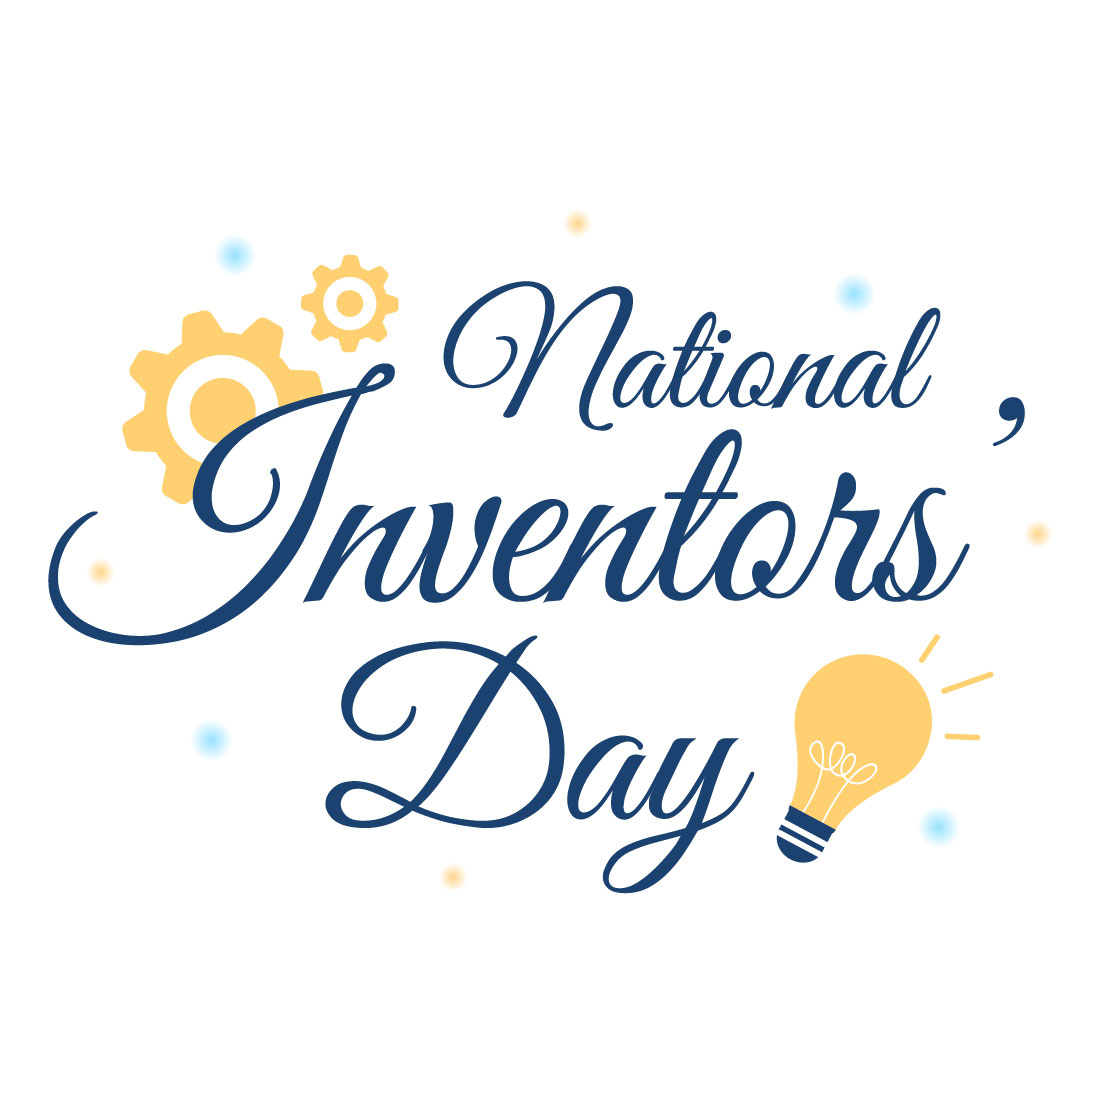 Inventors Day Illustration Design cover image.